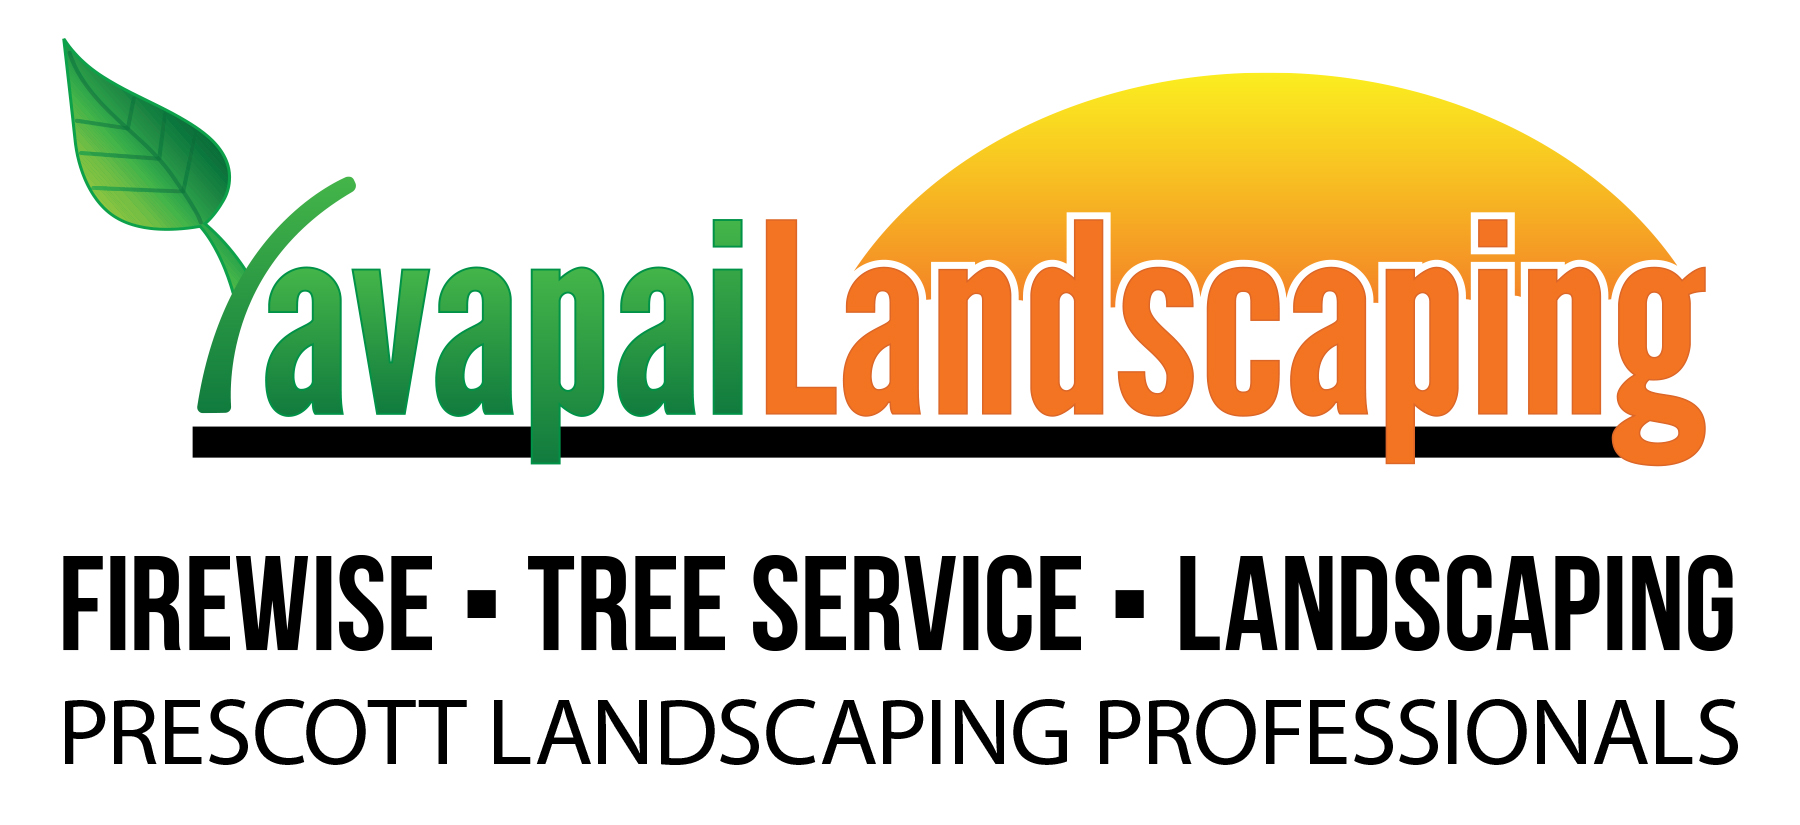 prescott-landscaping-professionals.jpg